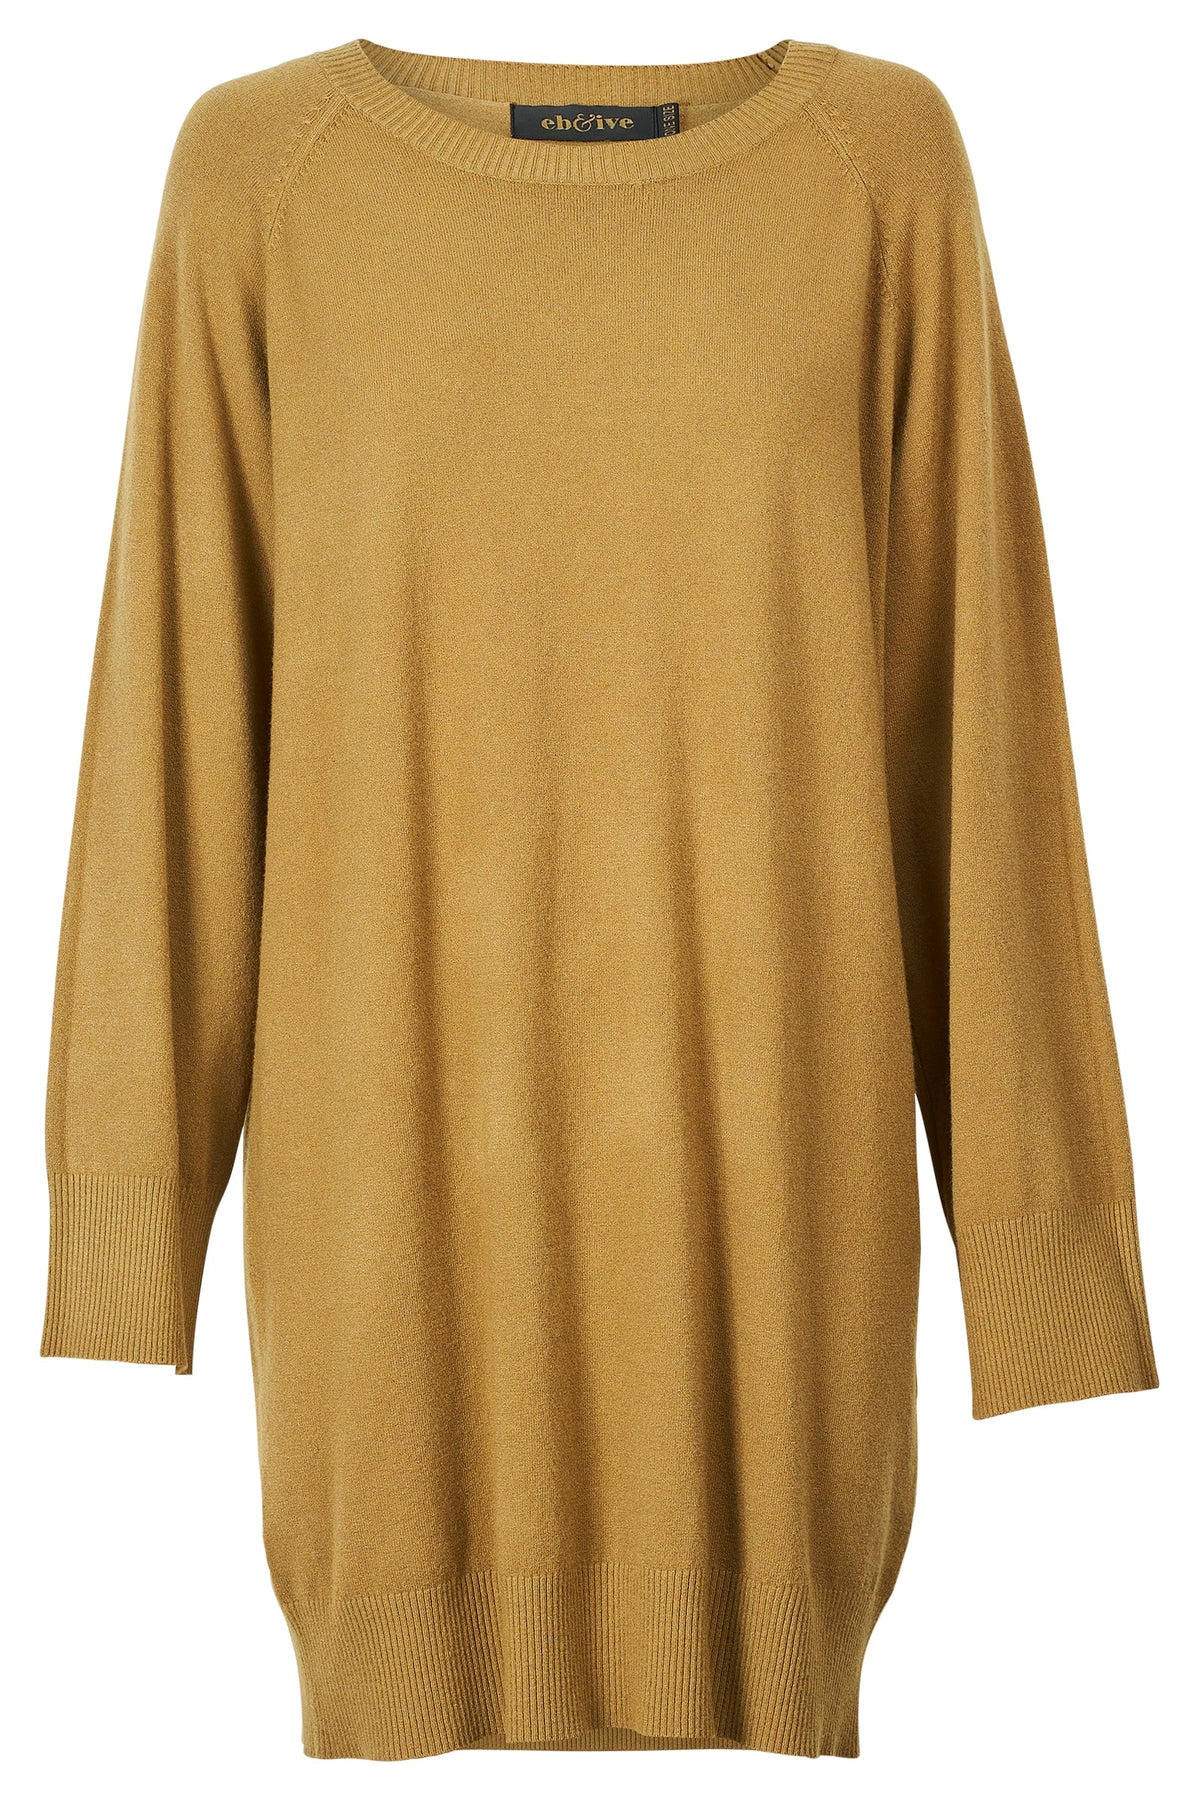 Gunyah Knit Top/Dress - EB & IVE Top One Size Dijon NZ LUMA